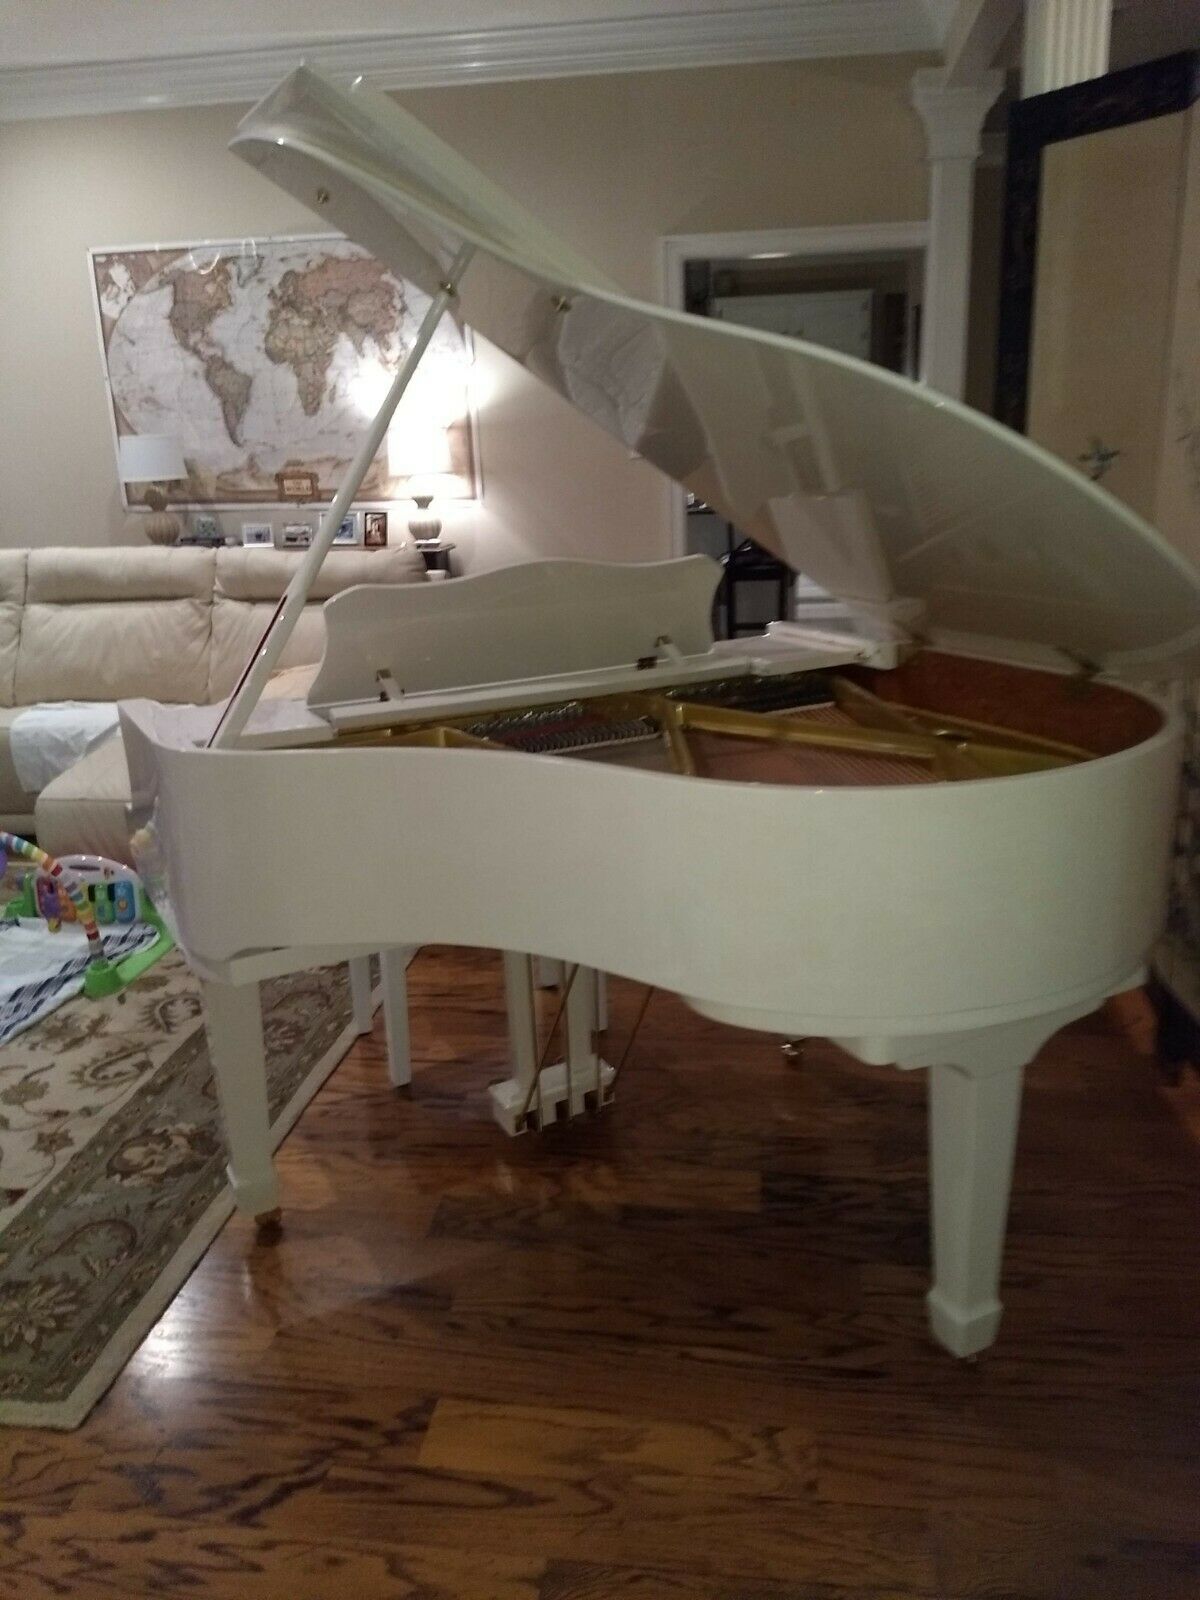 White Baby Grand Piano Whole, Baby Grand Piano On Hardwood Floor